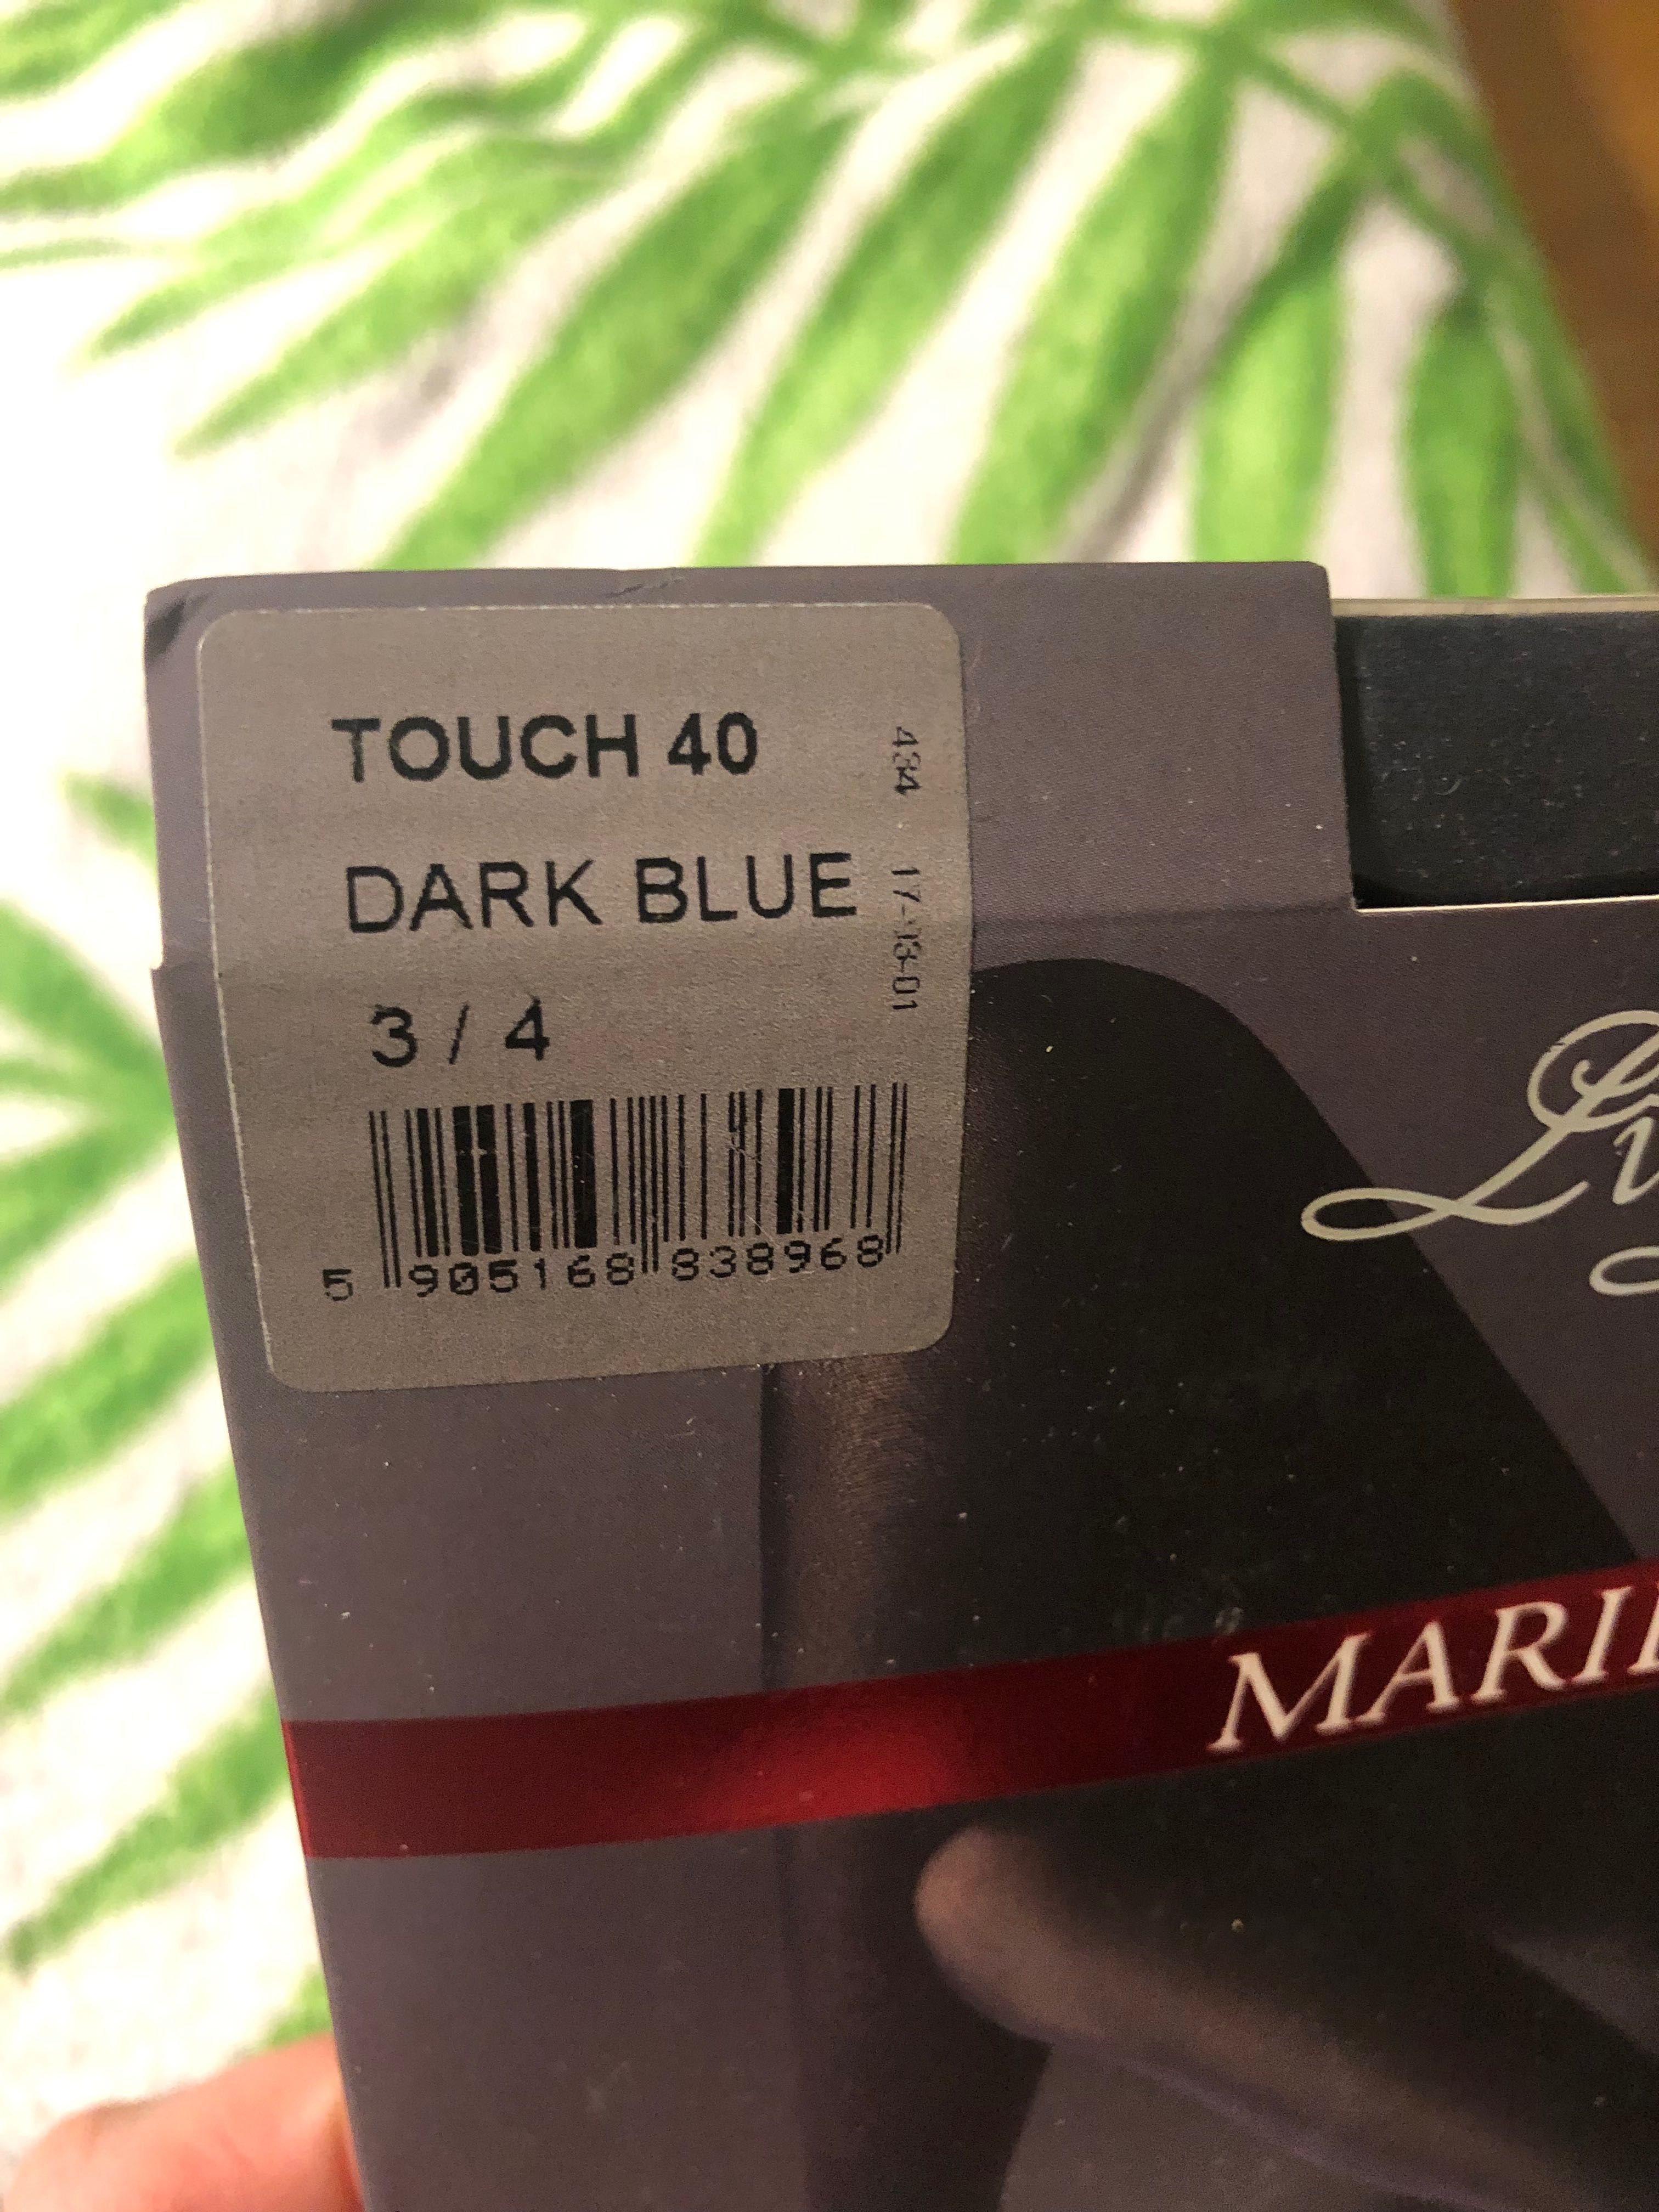 Rajstopy Marilyn touch 40 Dark Blue 3/4